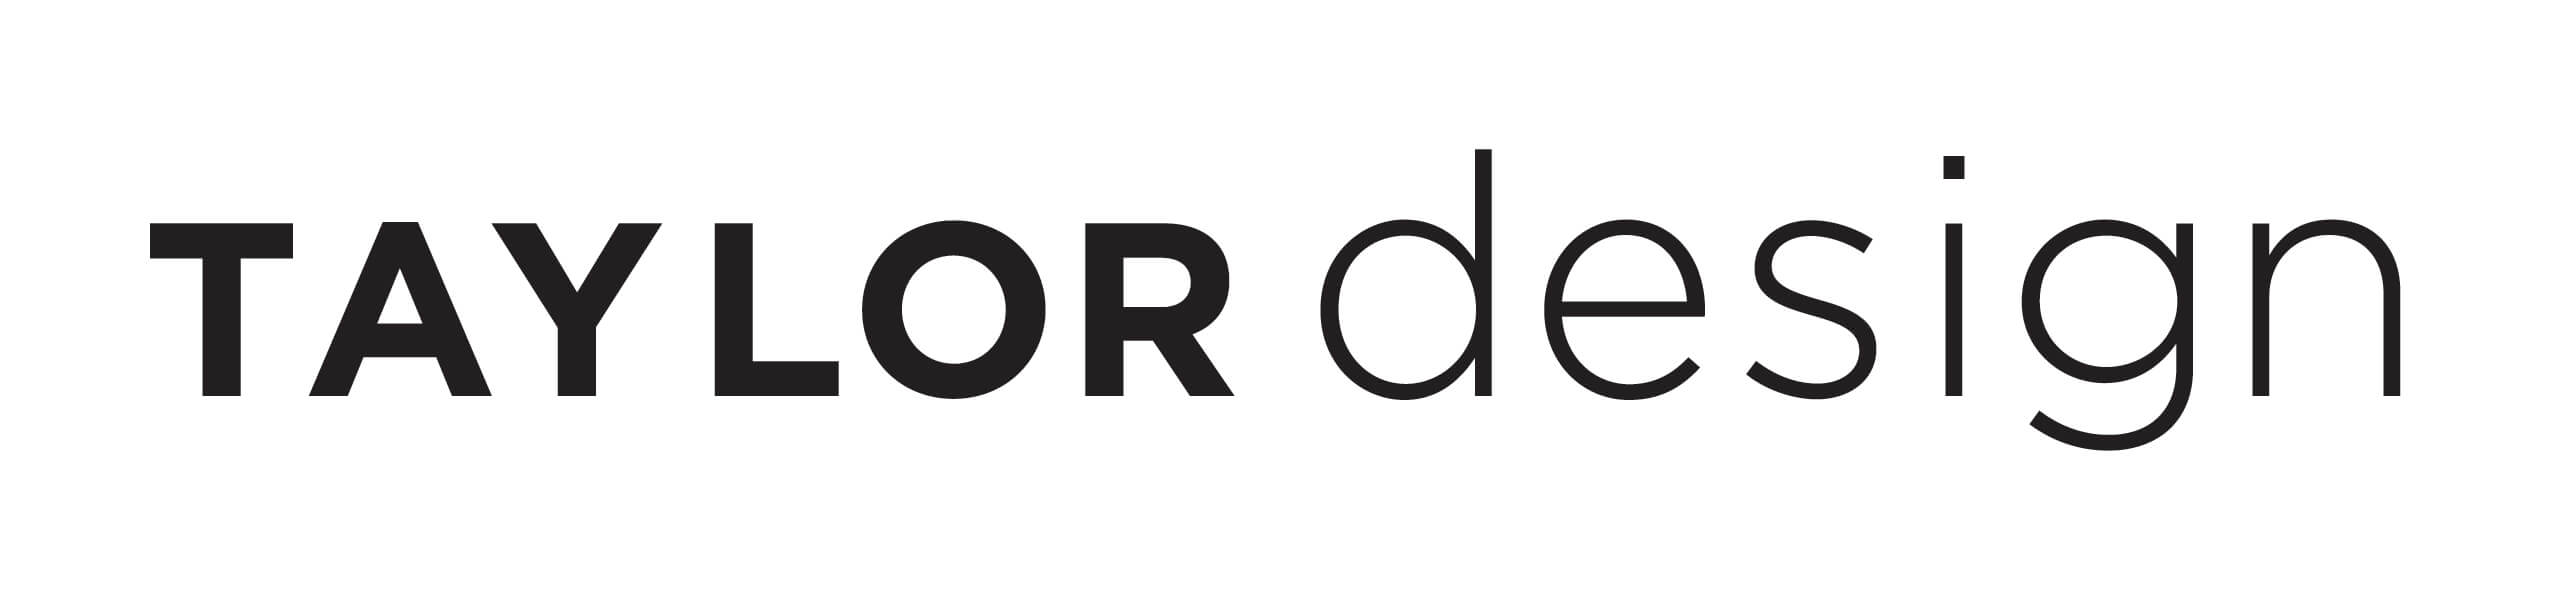 TAYLOR design logo black text on a white background